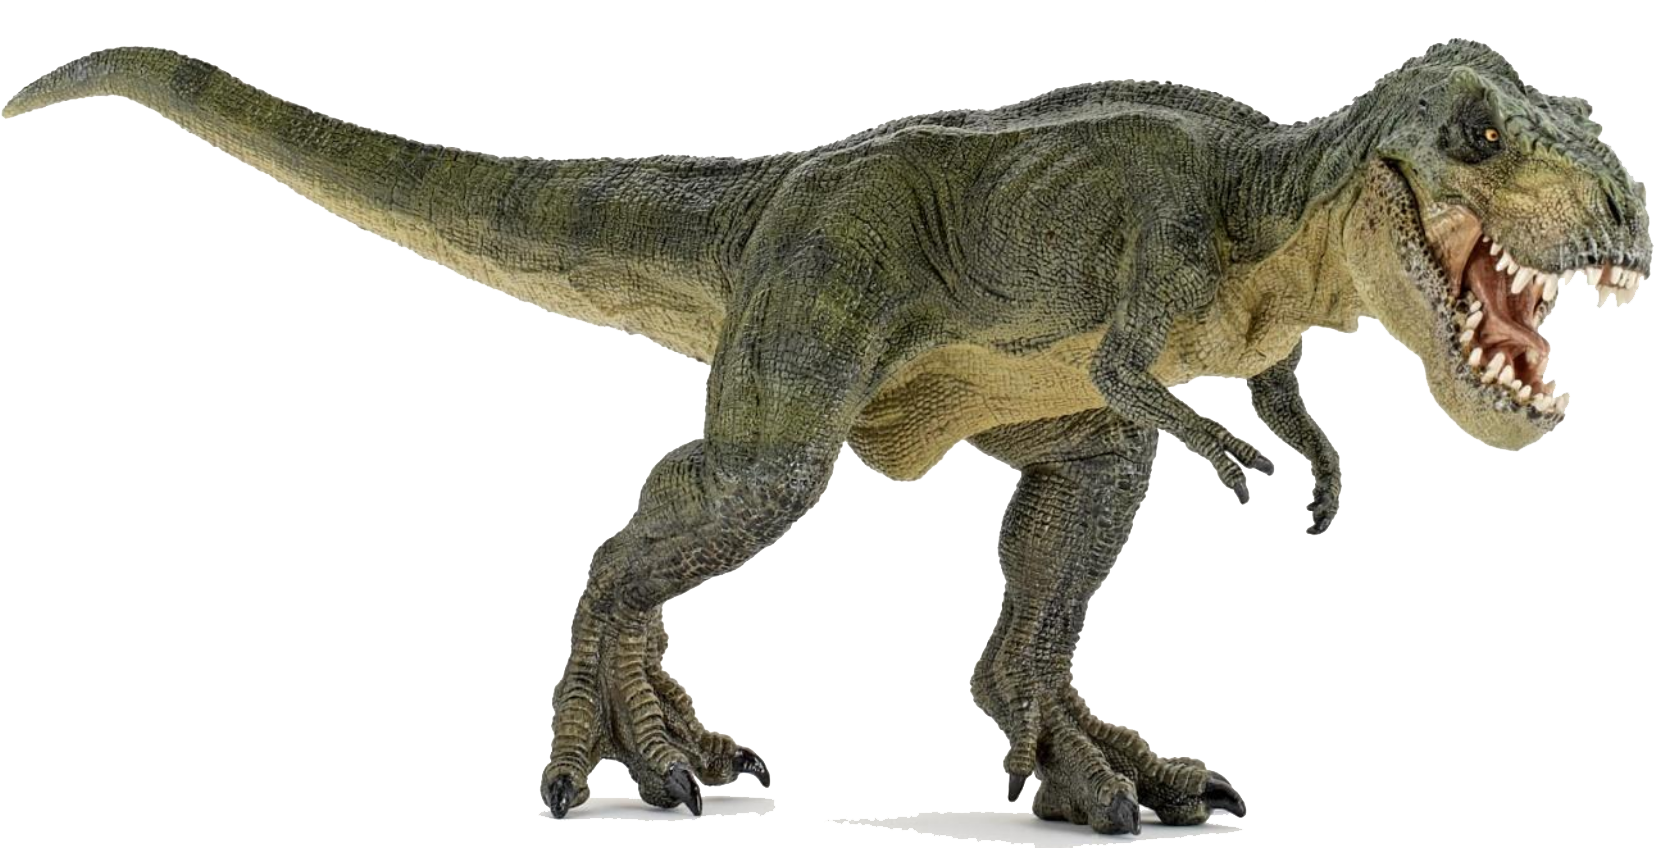 Jurassic park t-rex.PNG